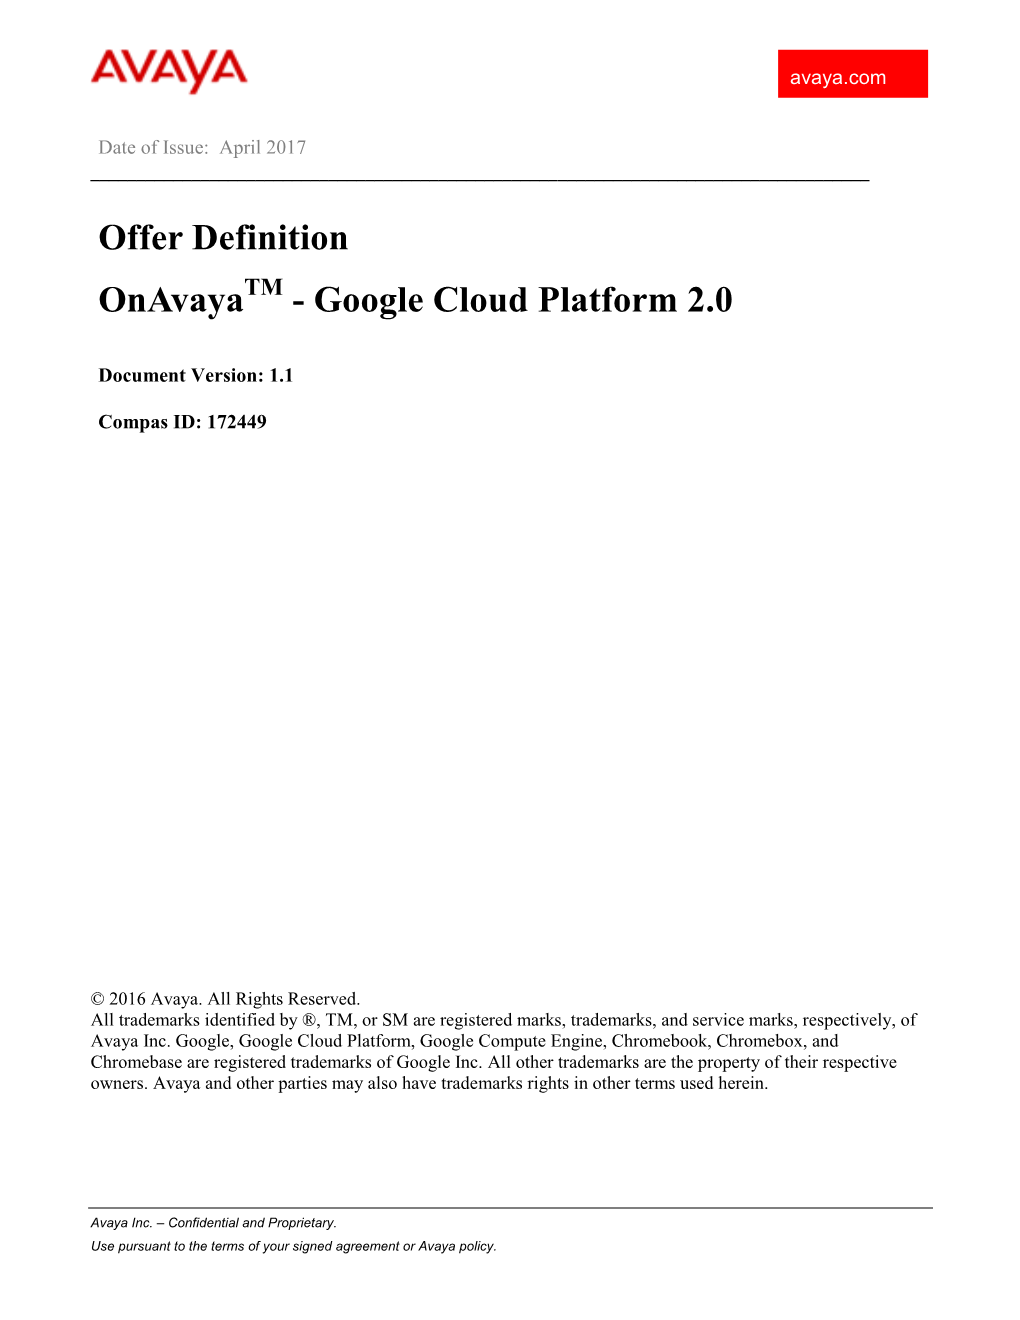 Google Cloud Platform 2.0